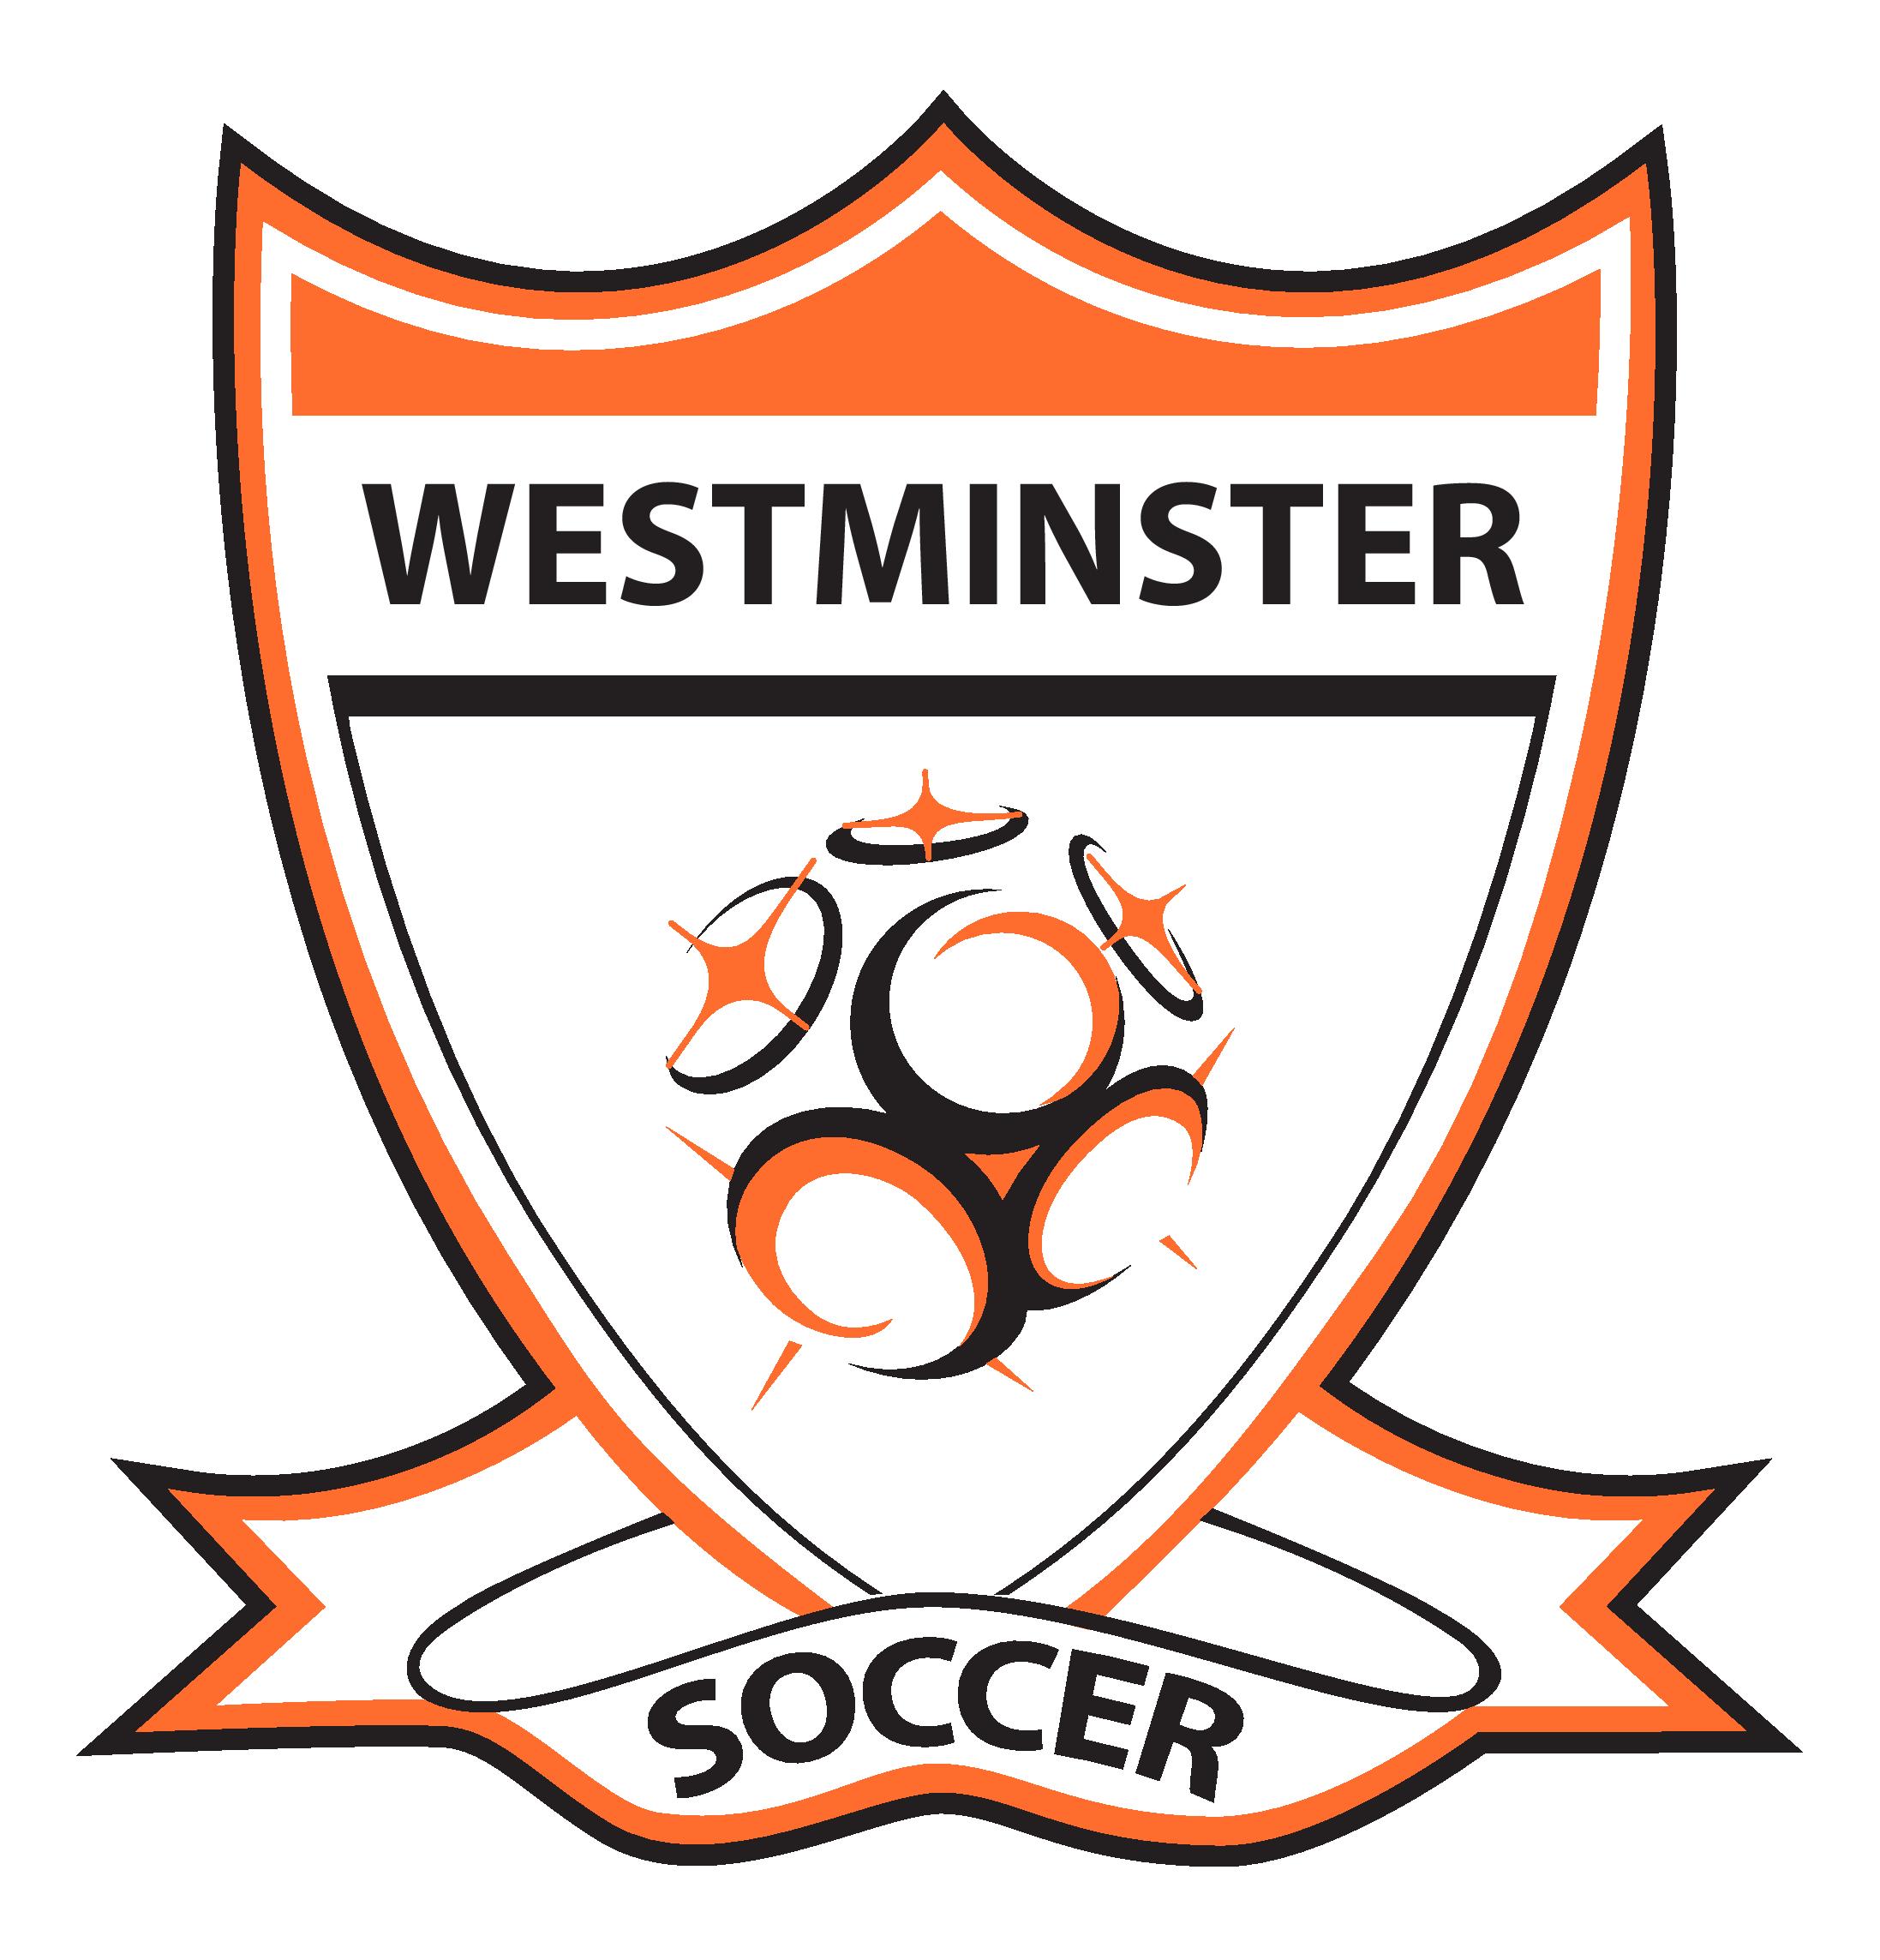 Westminster Soccer team badge